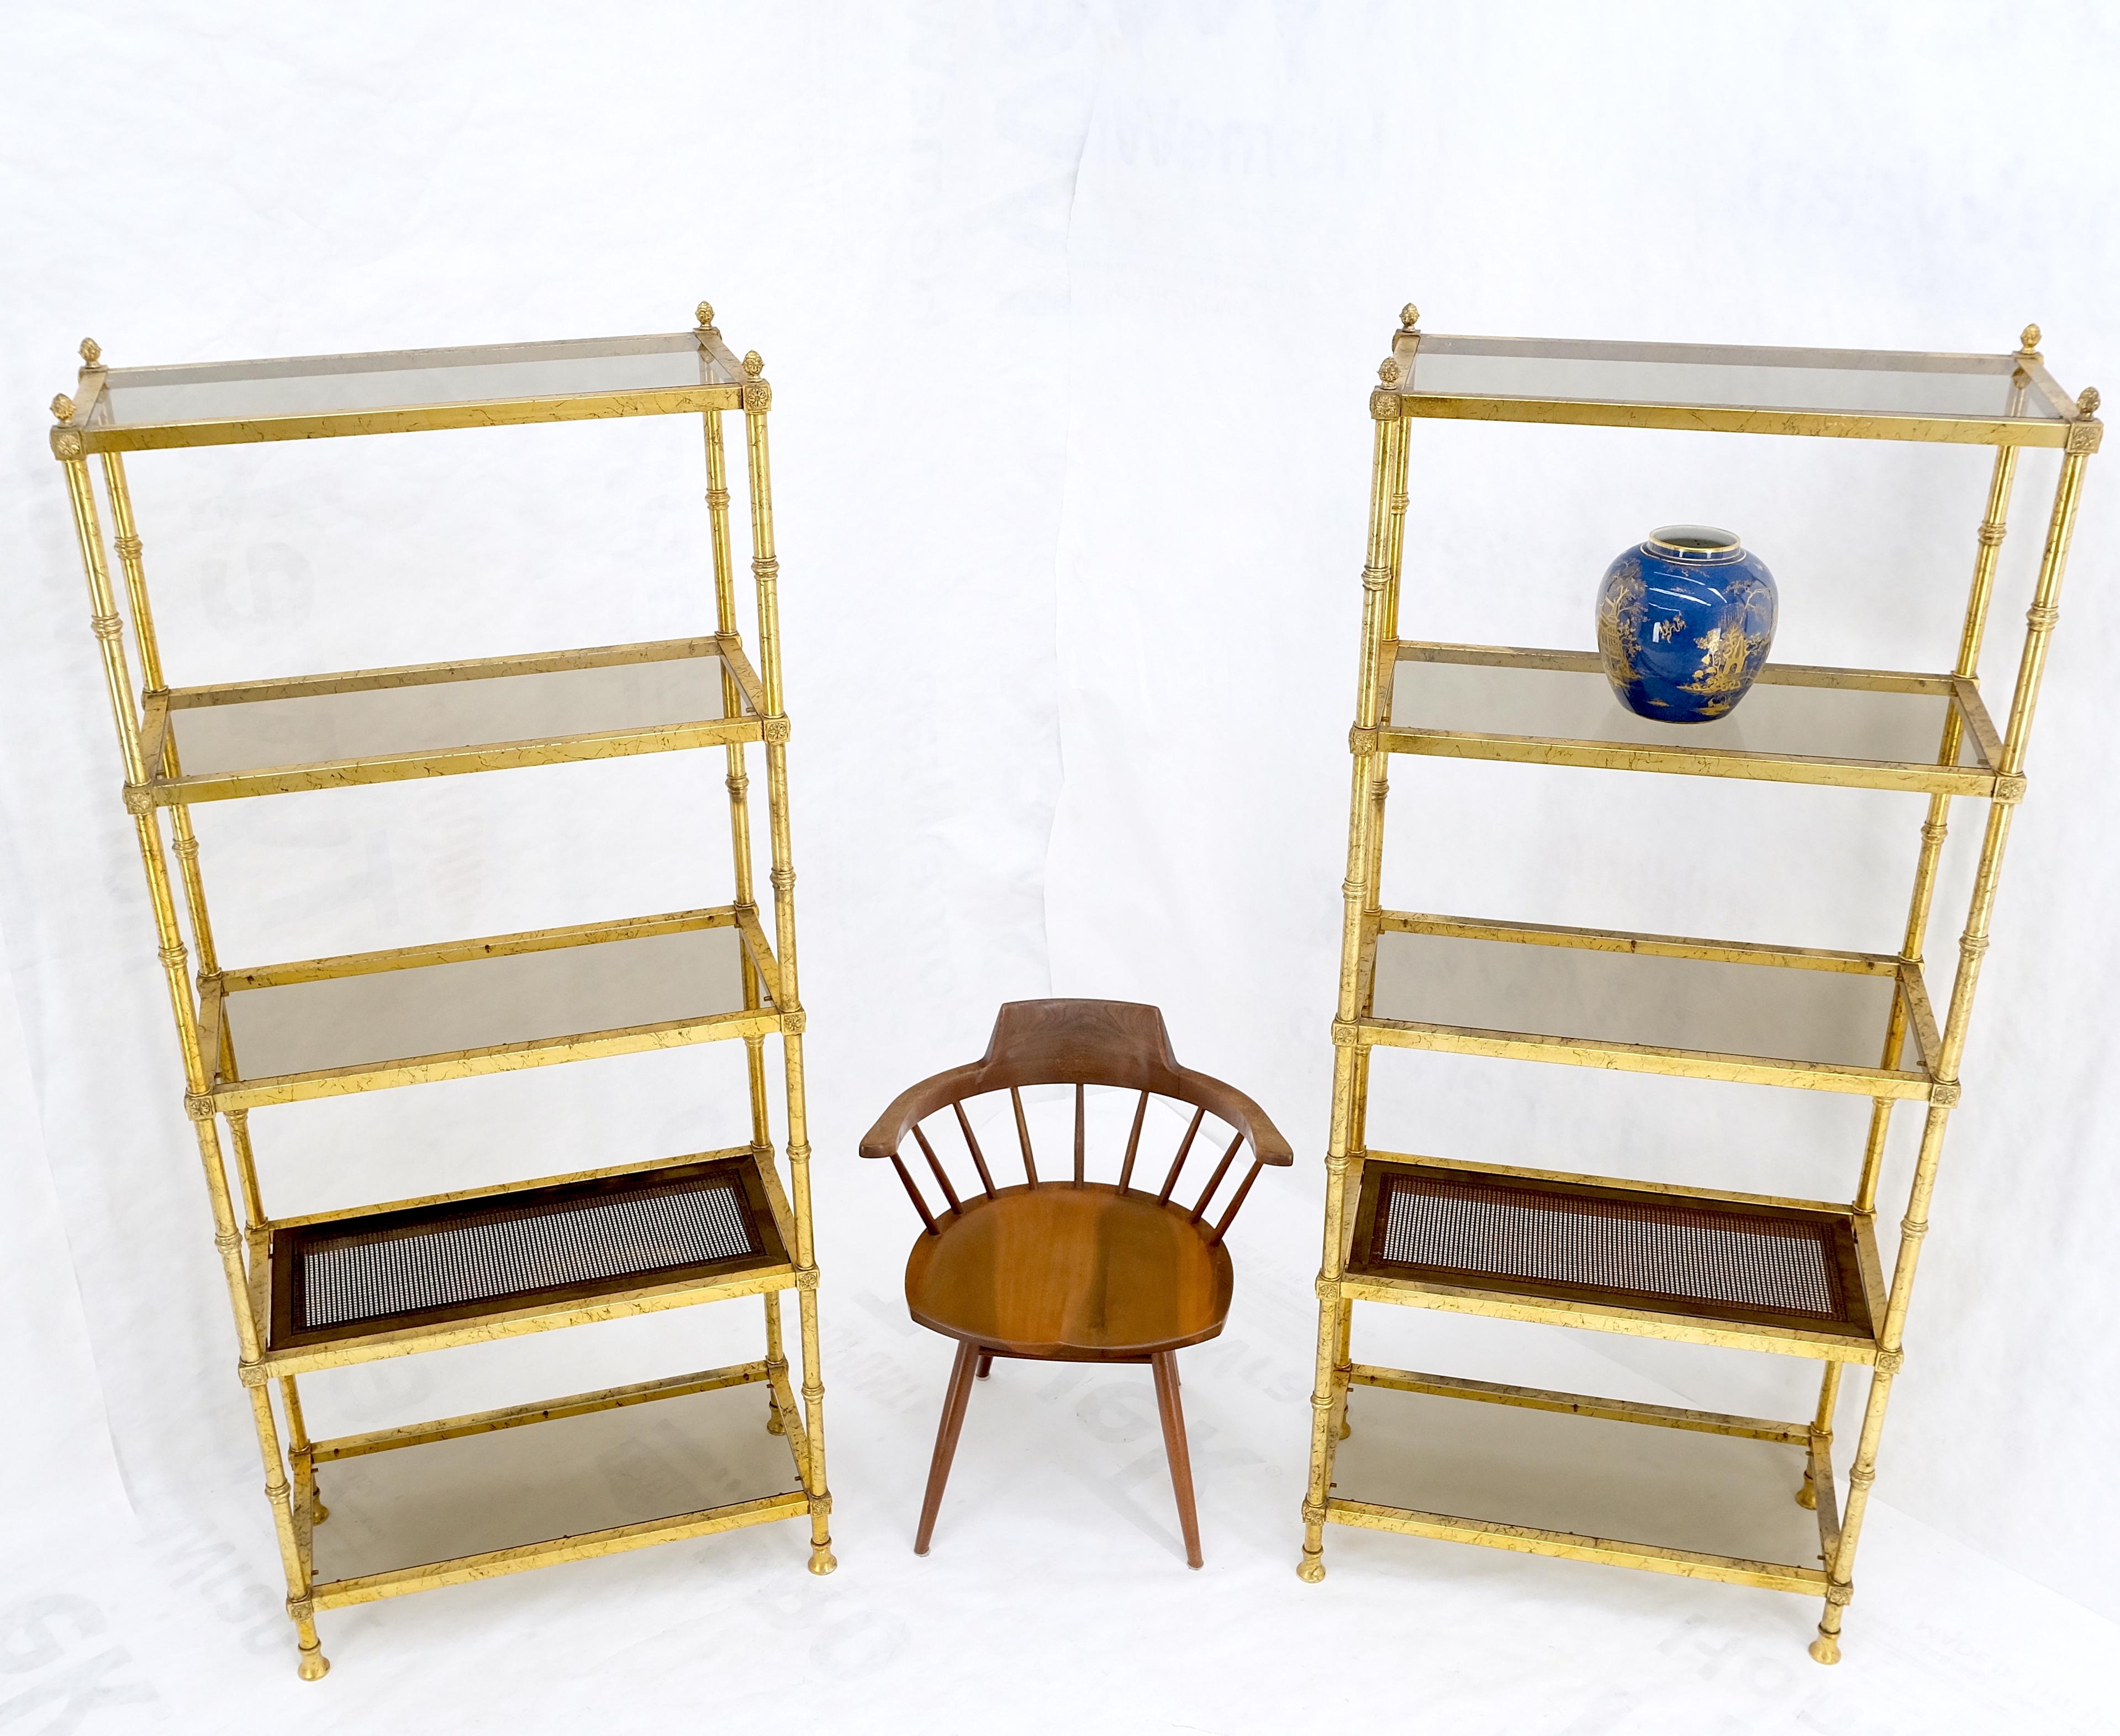 Pair of Gold Finish Cane & Glass Shelf Decorative Etageres Display Wall Units 6